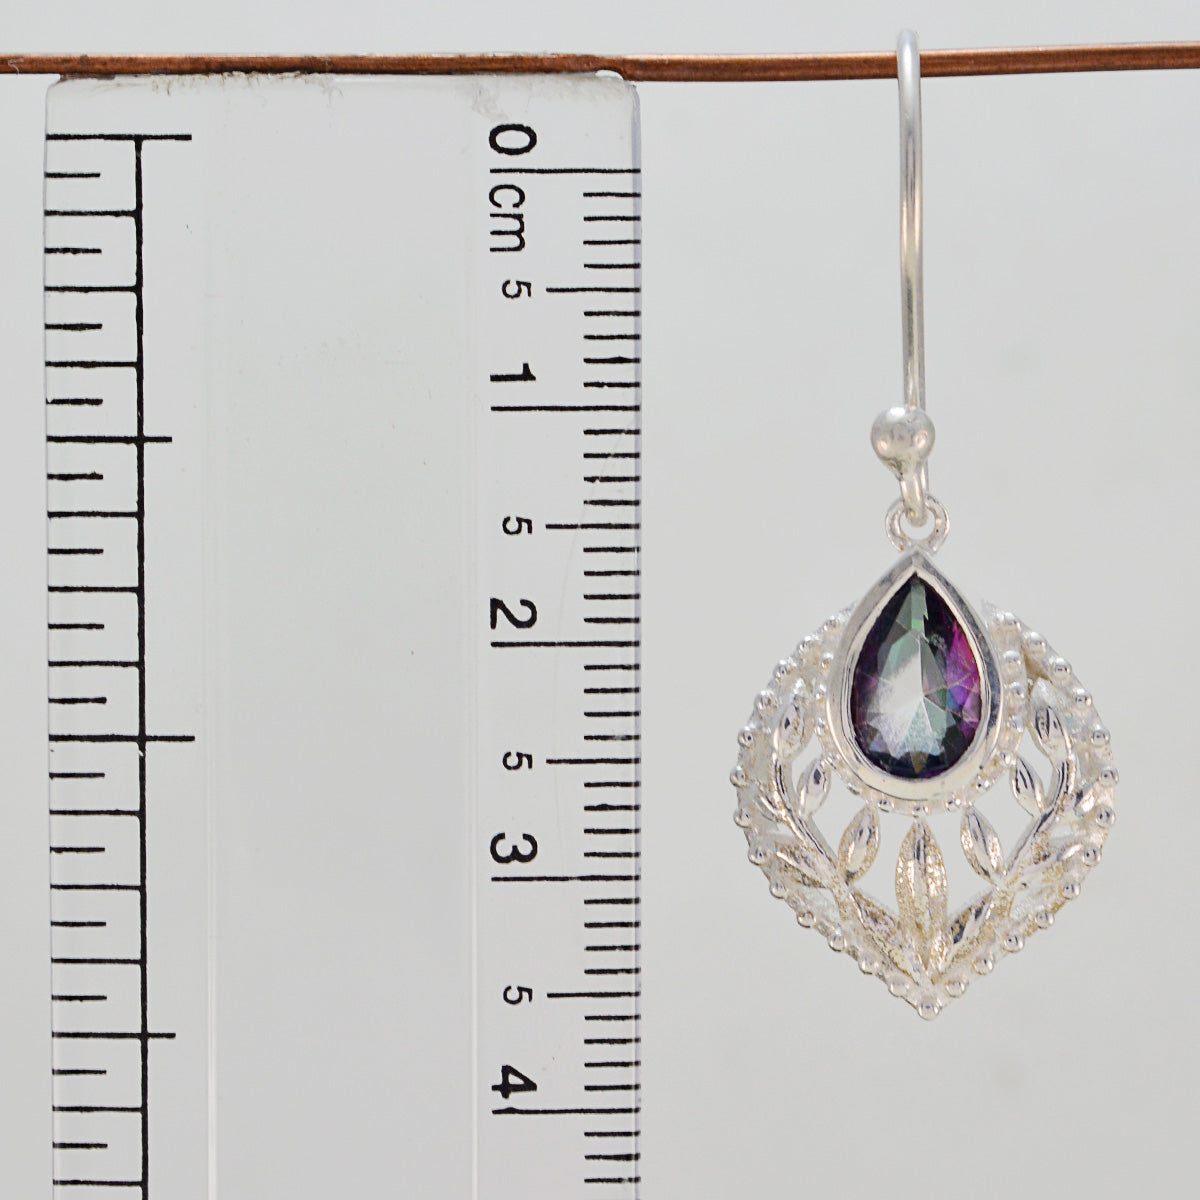 Riyo Good Gemstones Pear Faceted Multi Mystic Quartz Silver Earrings independence gift